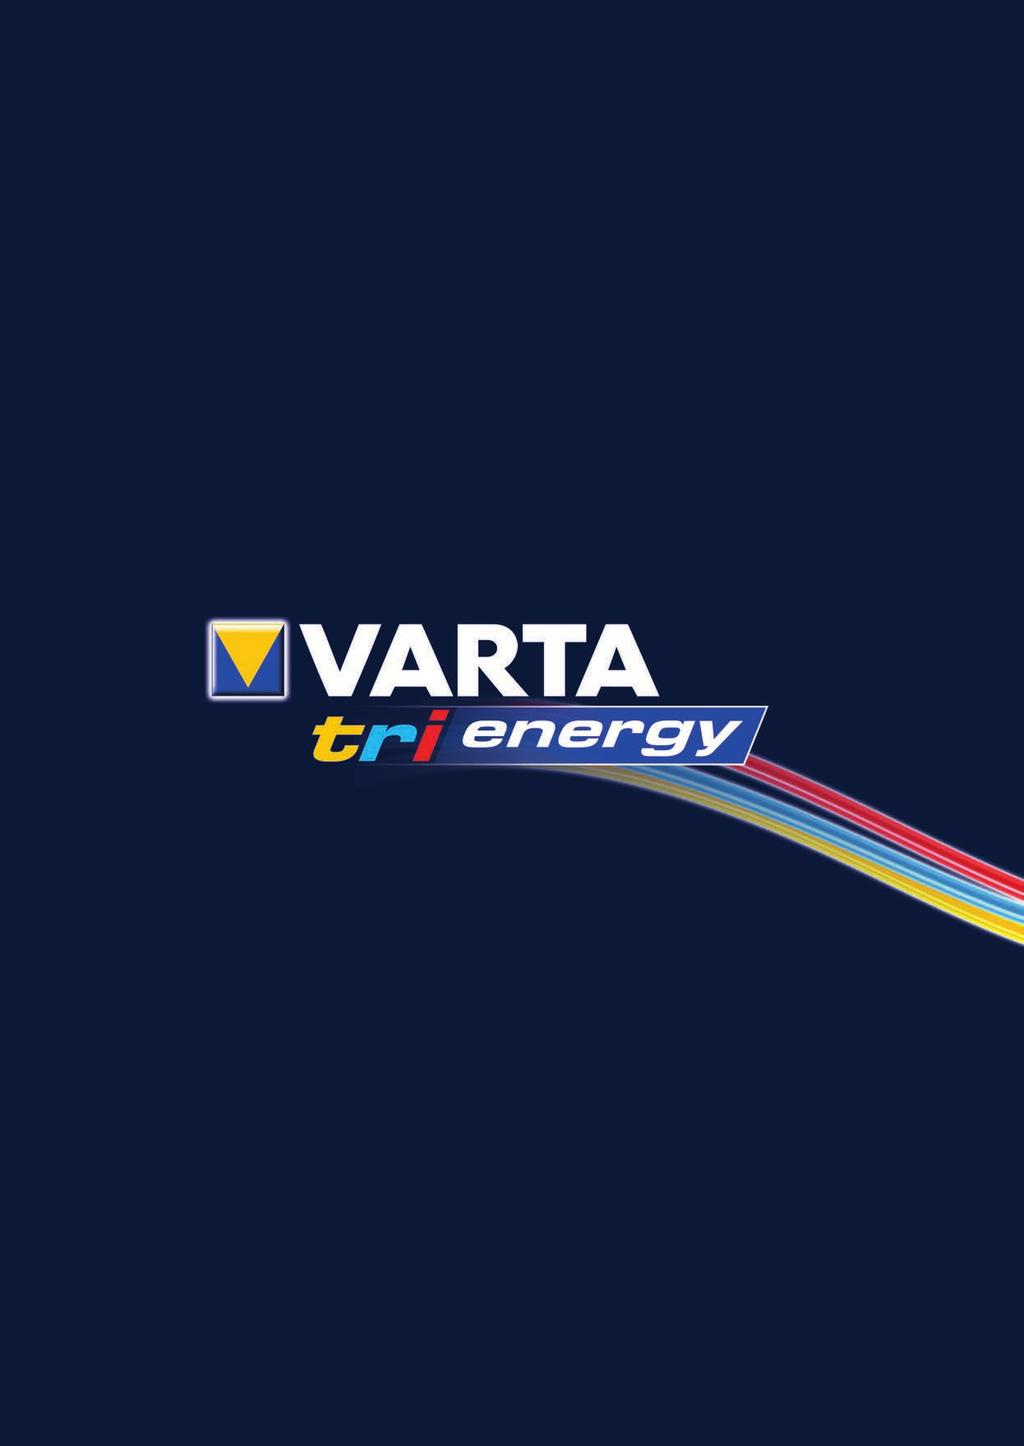 VARTA Consumer Batteries GmbH & Co. KGaA I Vertrieb Deutschland I Alfred-Krupp-Str. 9 I D-73479 Ellwangen I Tel. (00 49) 79 61 83 770 I Fax (00 49) 800 827 8274 I www.varta-consumer.